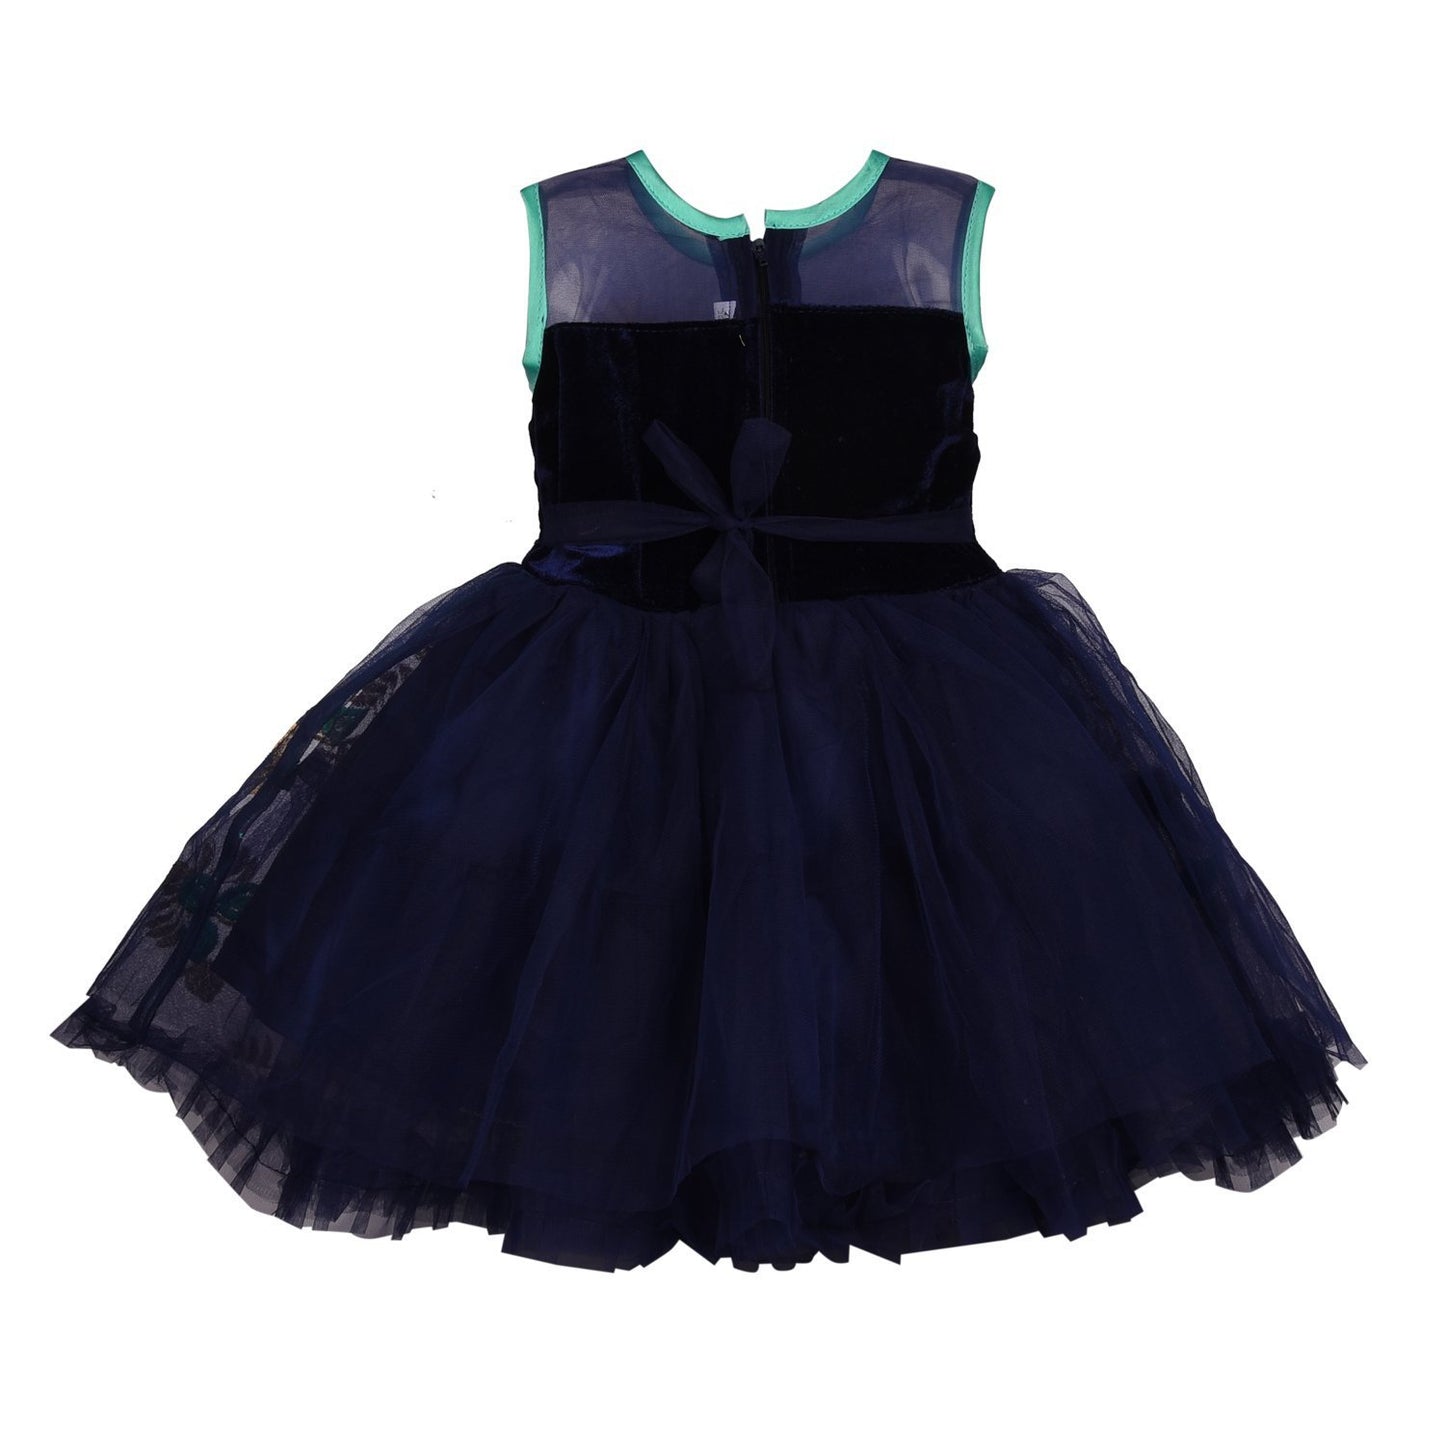 Baby Girls Party Wear Frock Dress Fre2177 -  Wish Karo Dresses